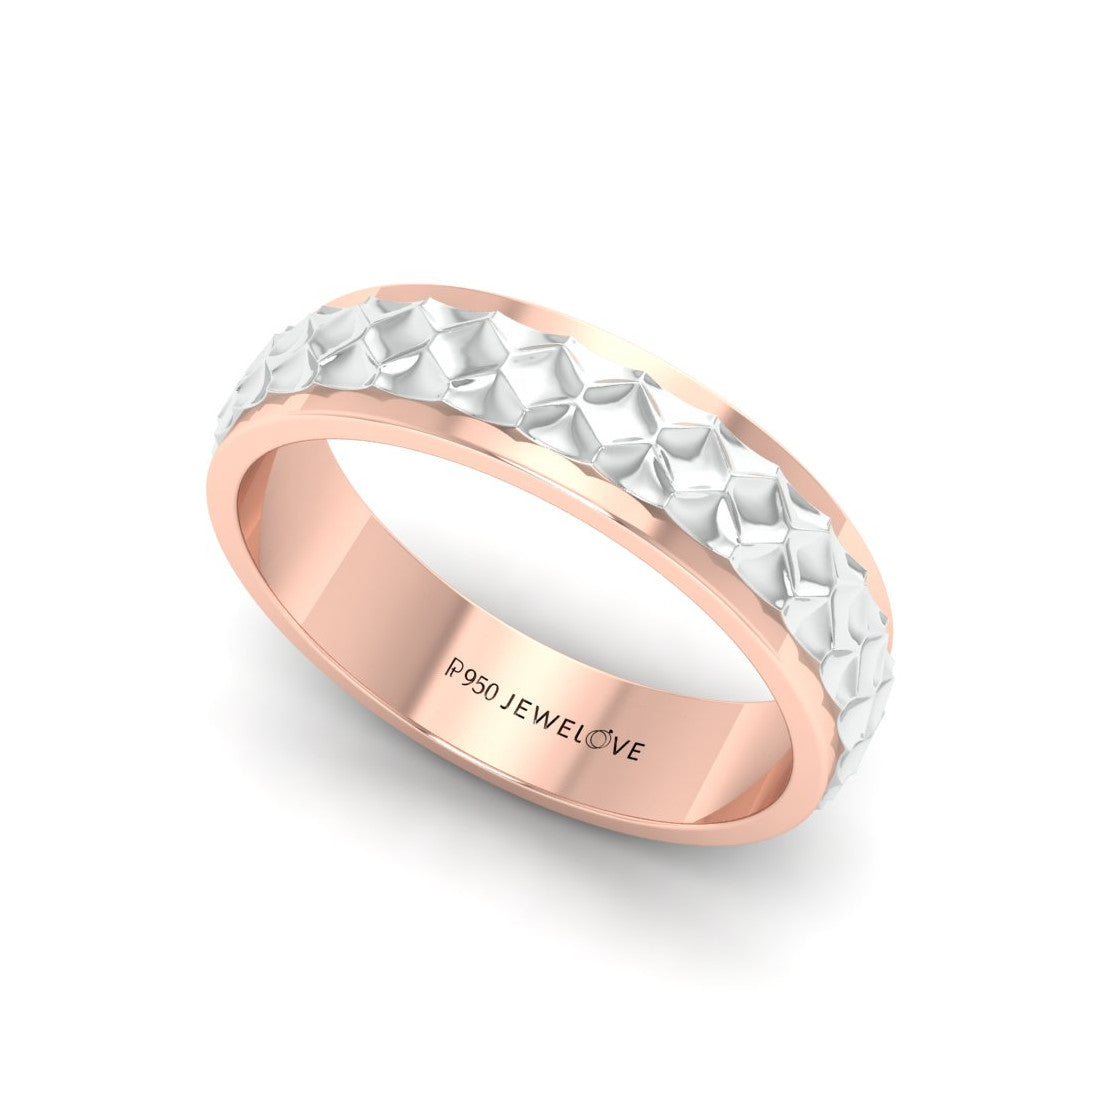 Designer Platinum & Rose Gold Couple Rings JL PT 1113   Jewelove.US